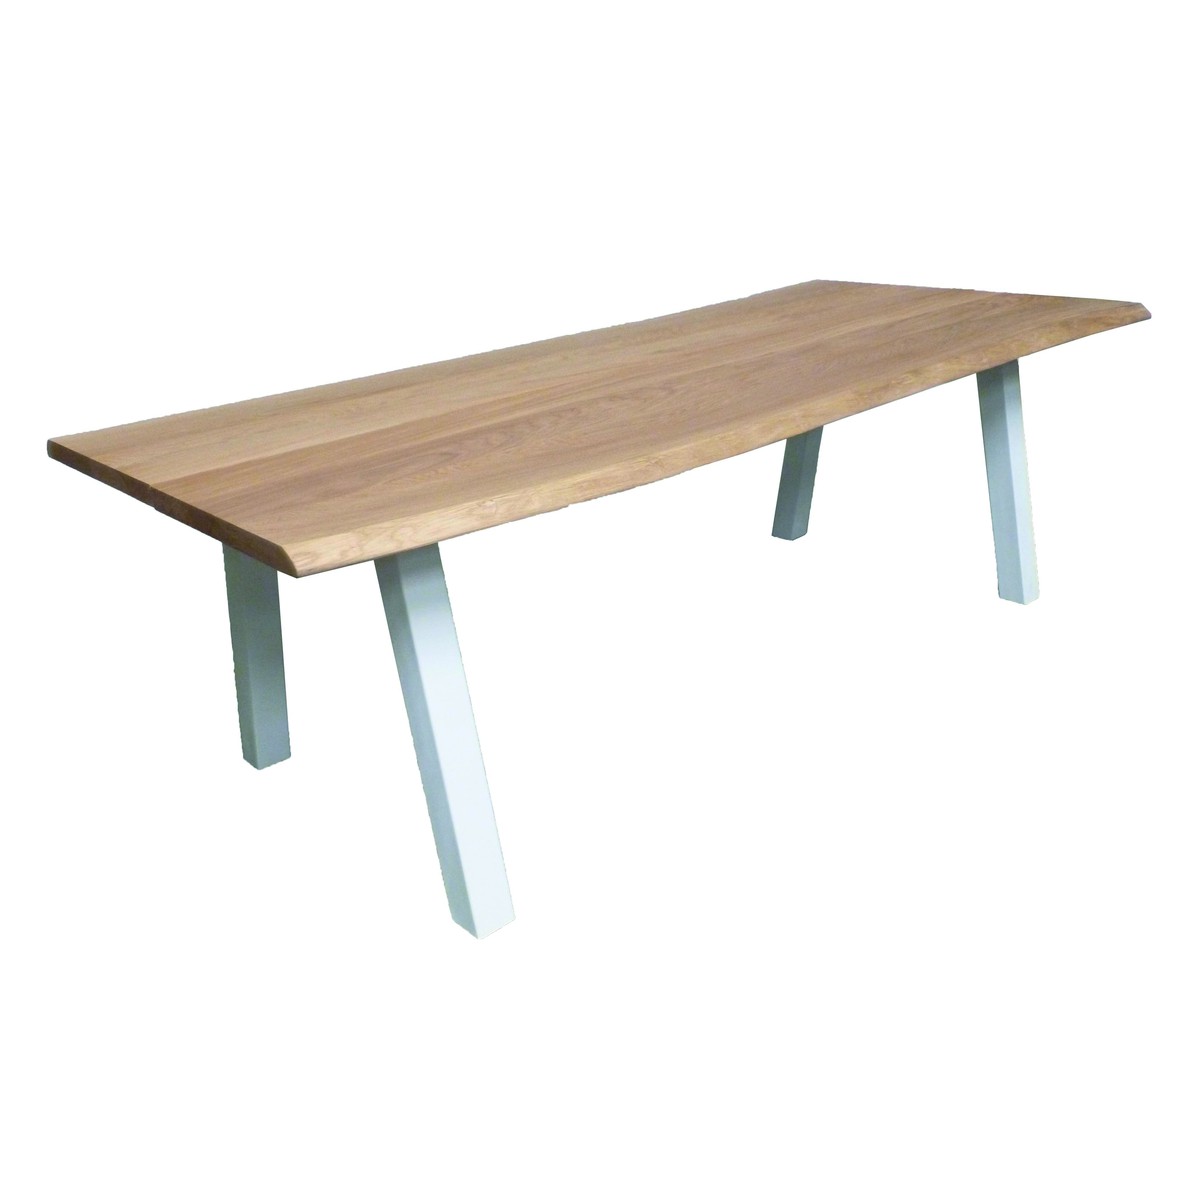   Table haute Flyn Trunk ouverte rectangulaire  160x100x90cm